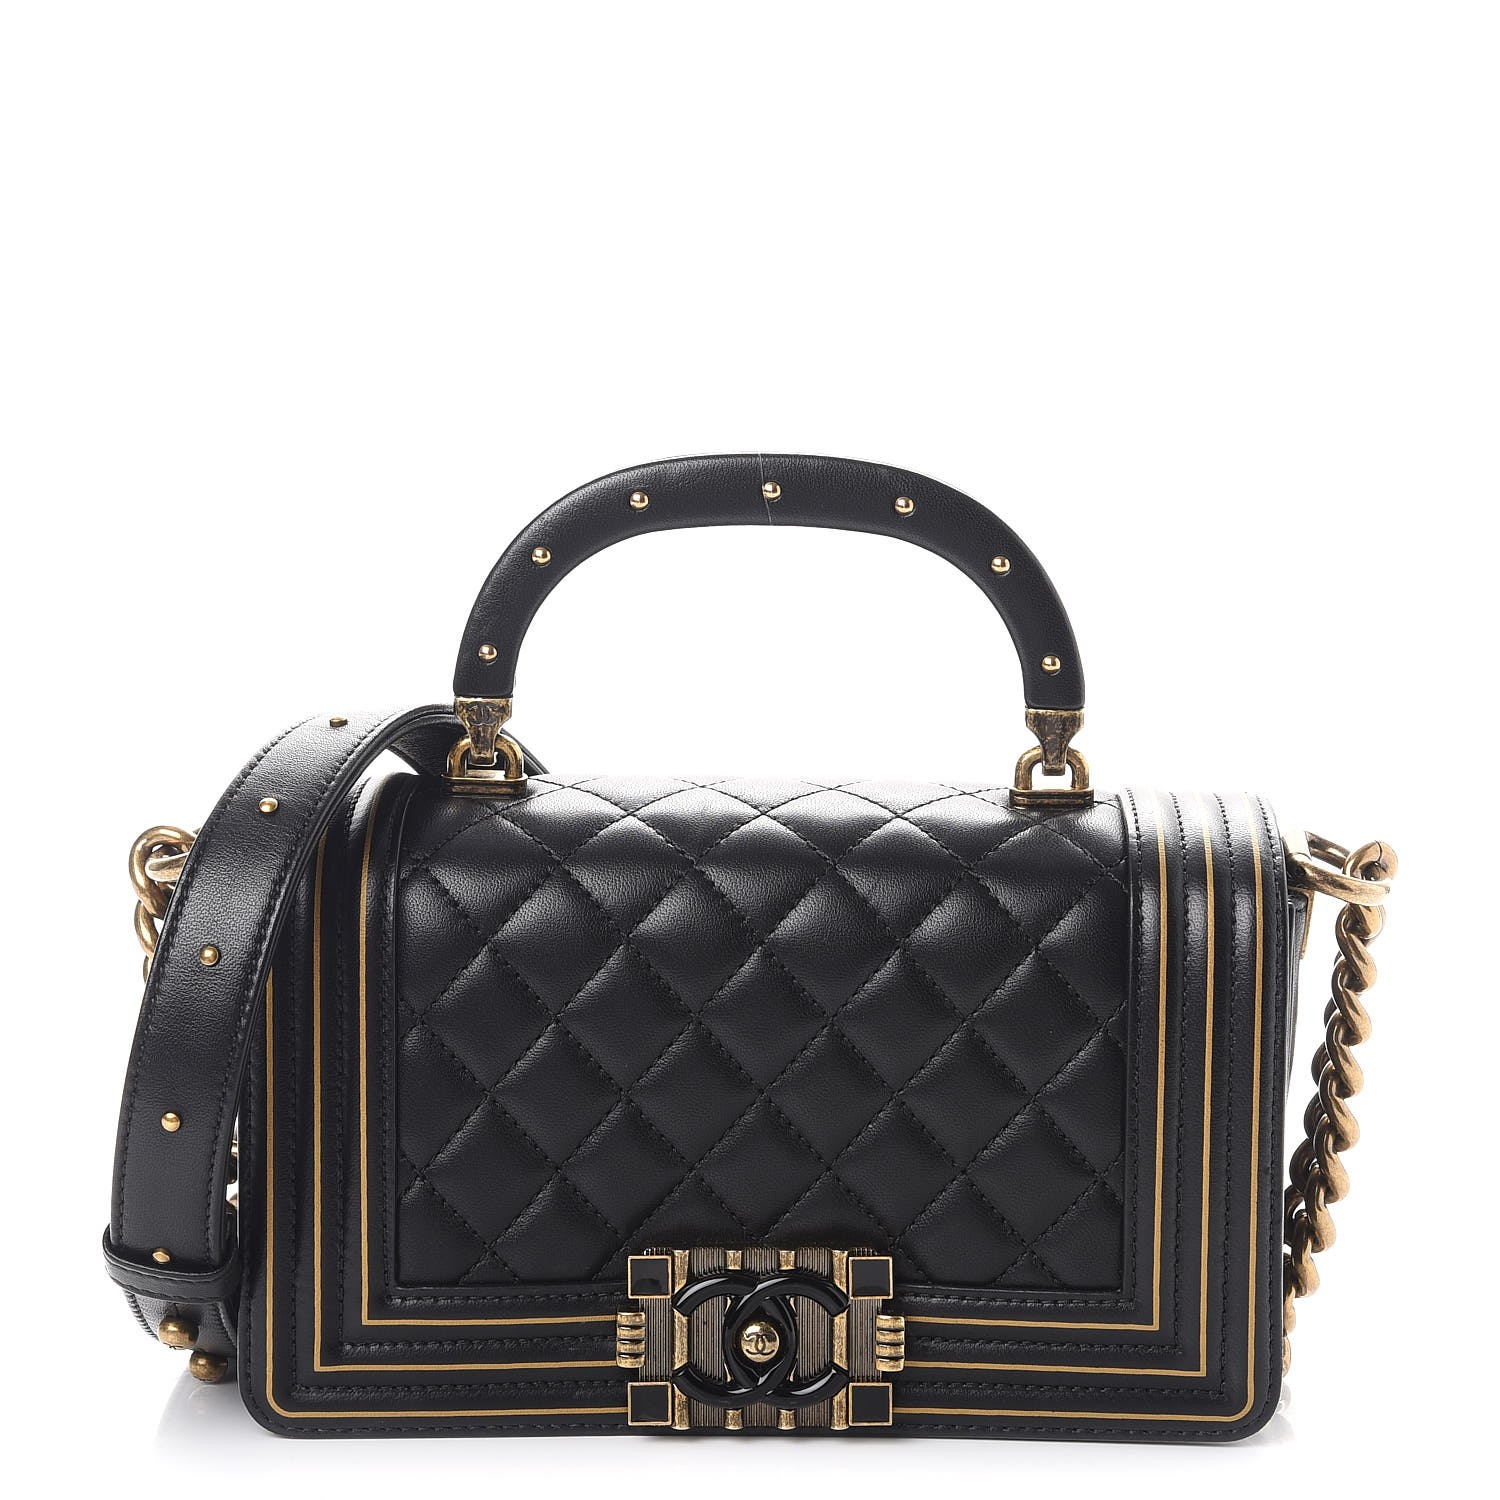 Small Boy Chanel Handbag Black And Gold